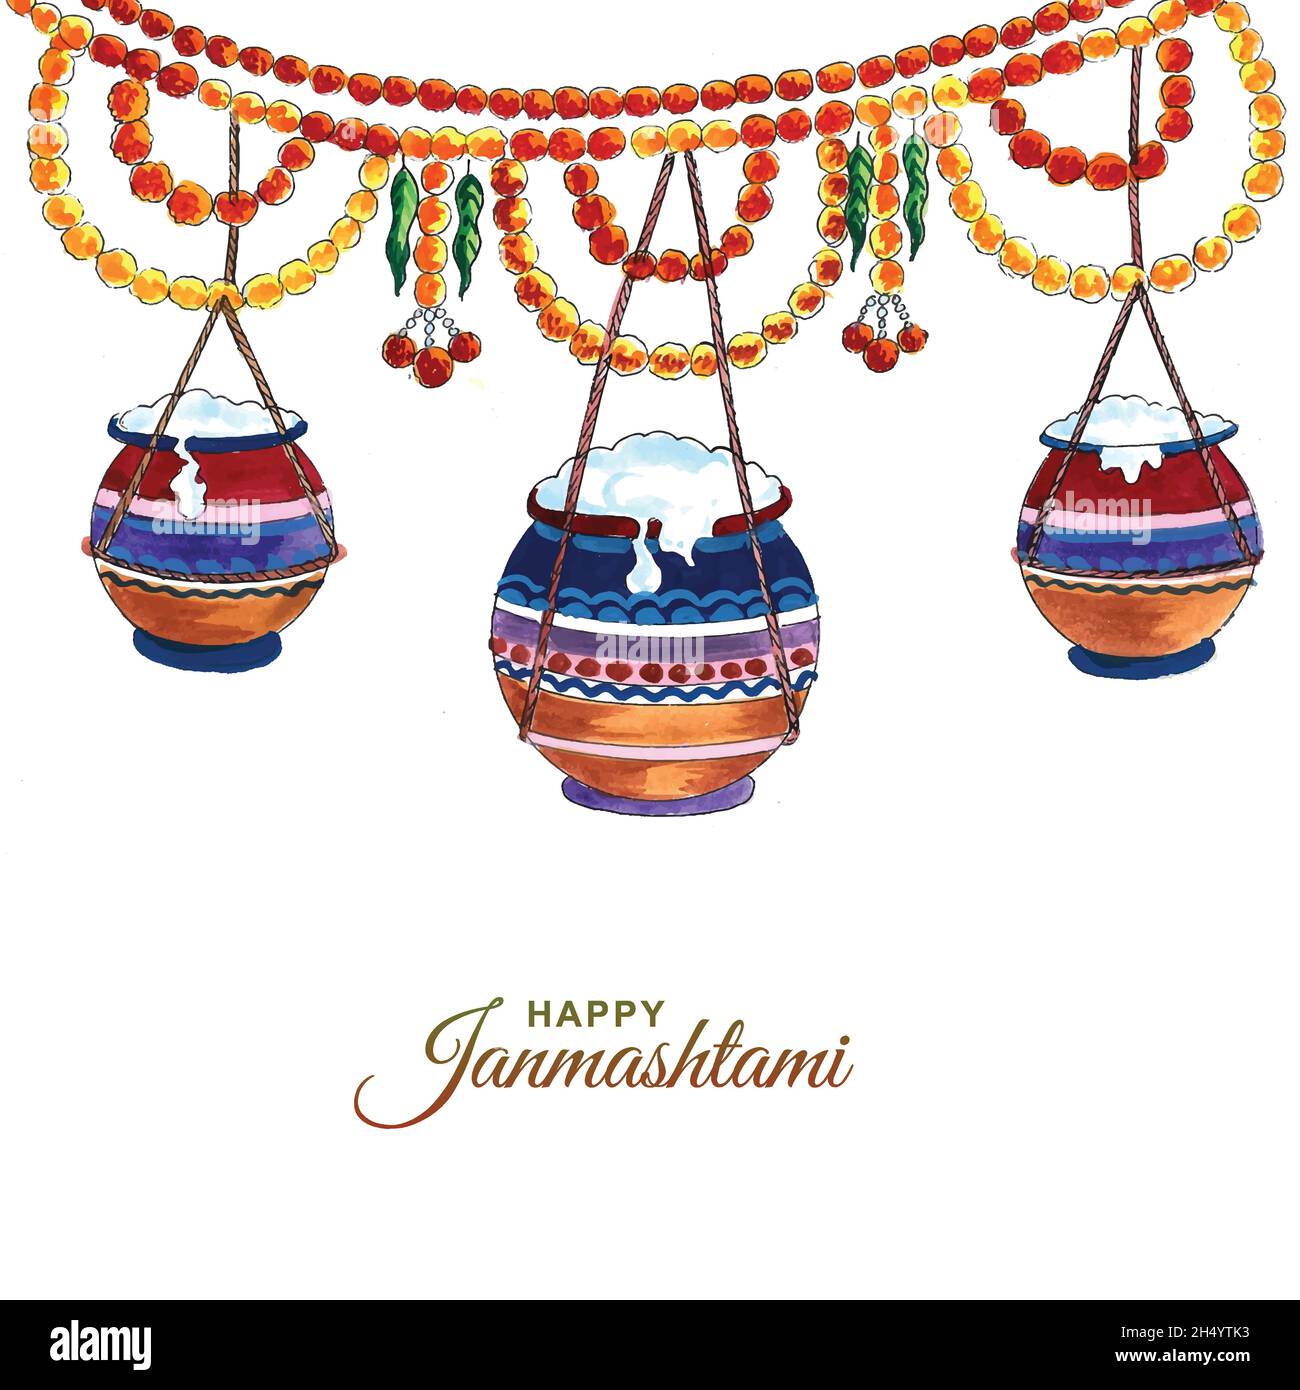 Indian hindu festival of janmashtami celebration card design Stock Vector